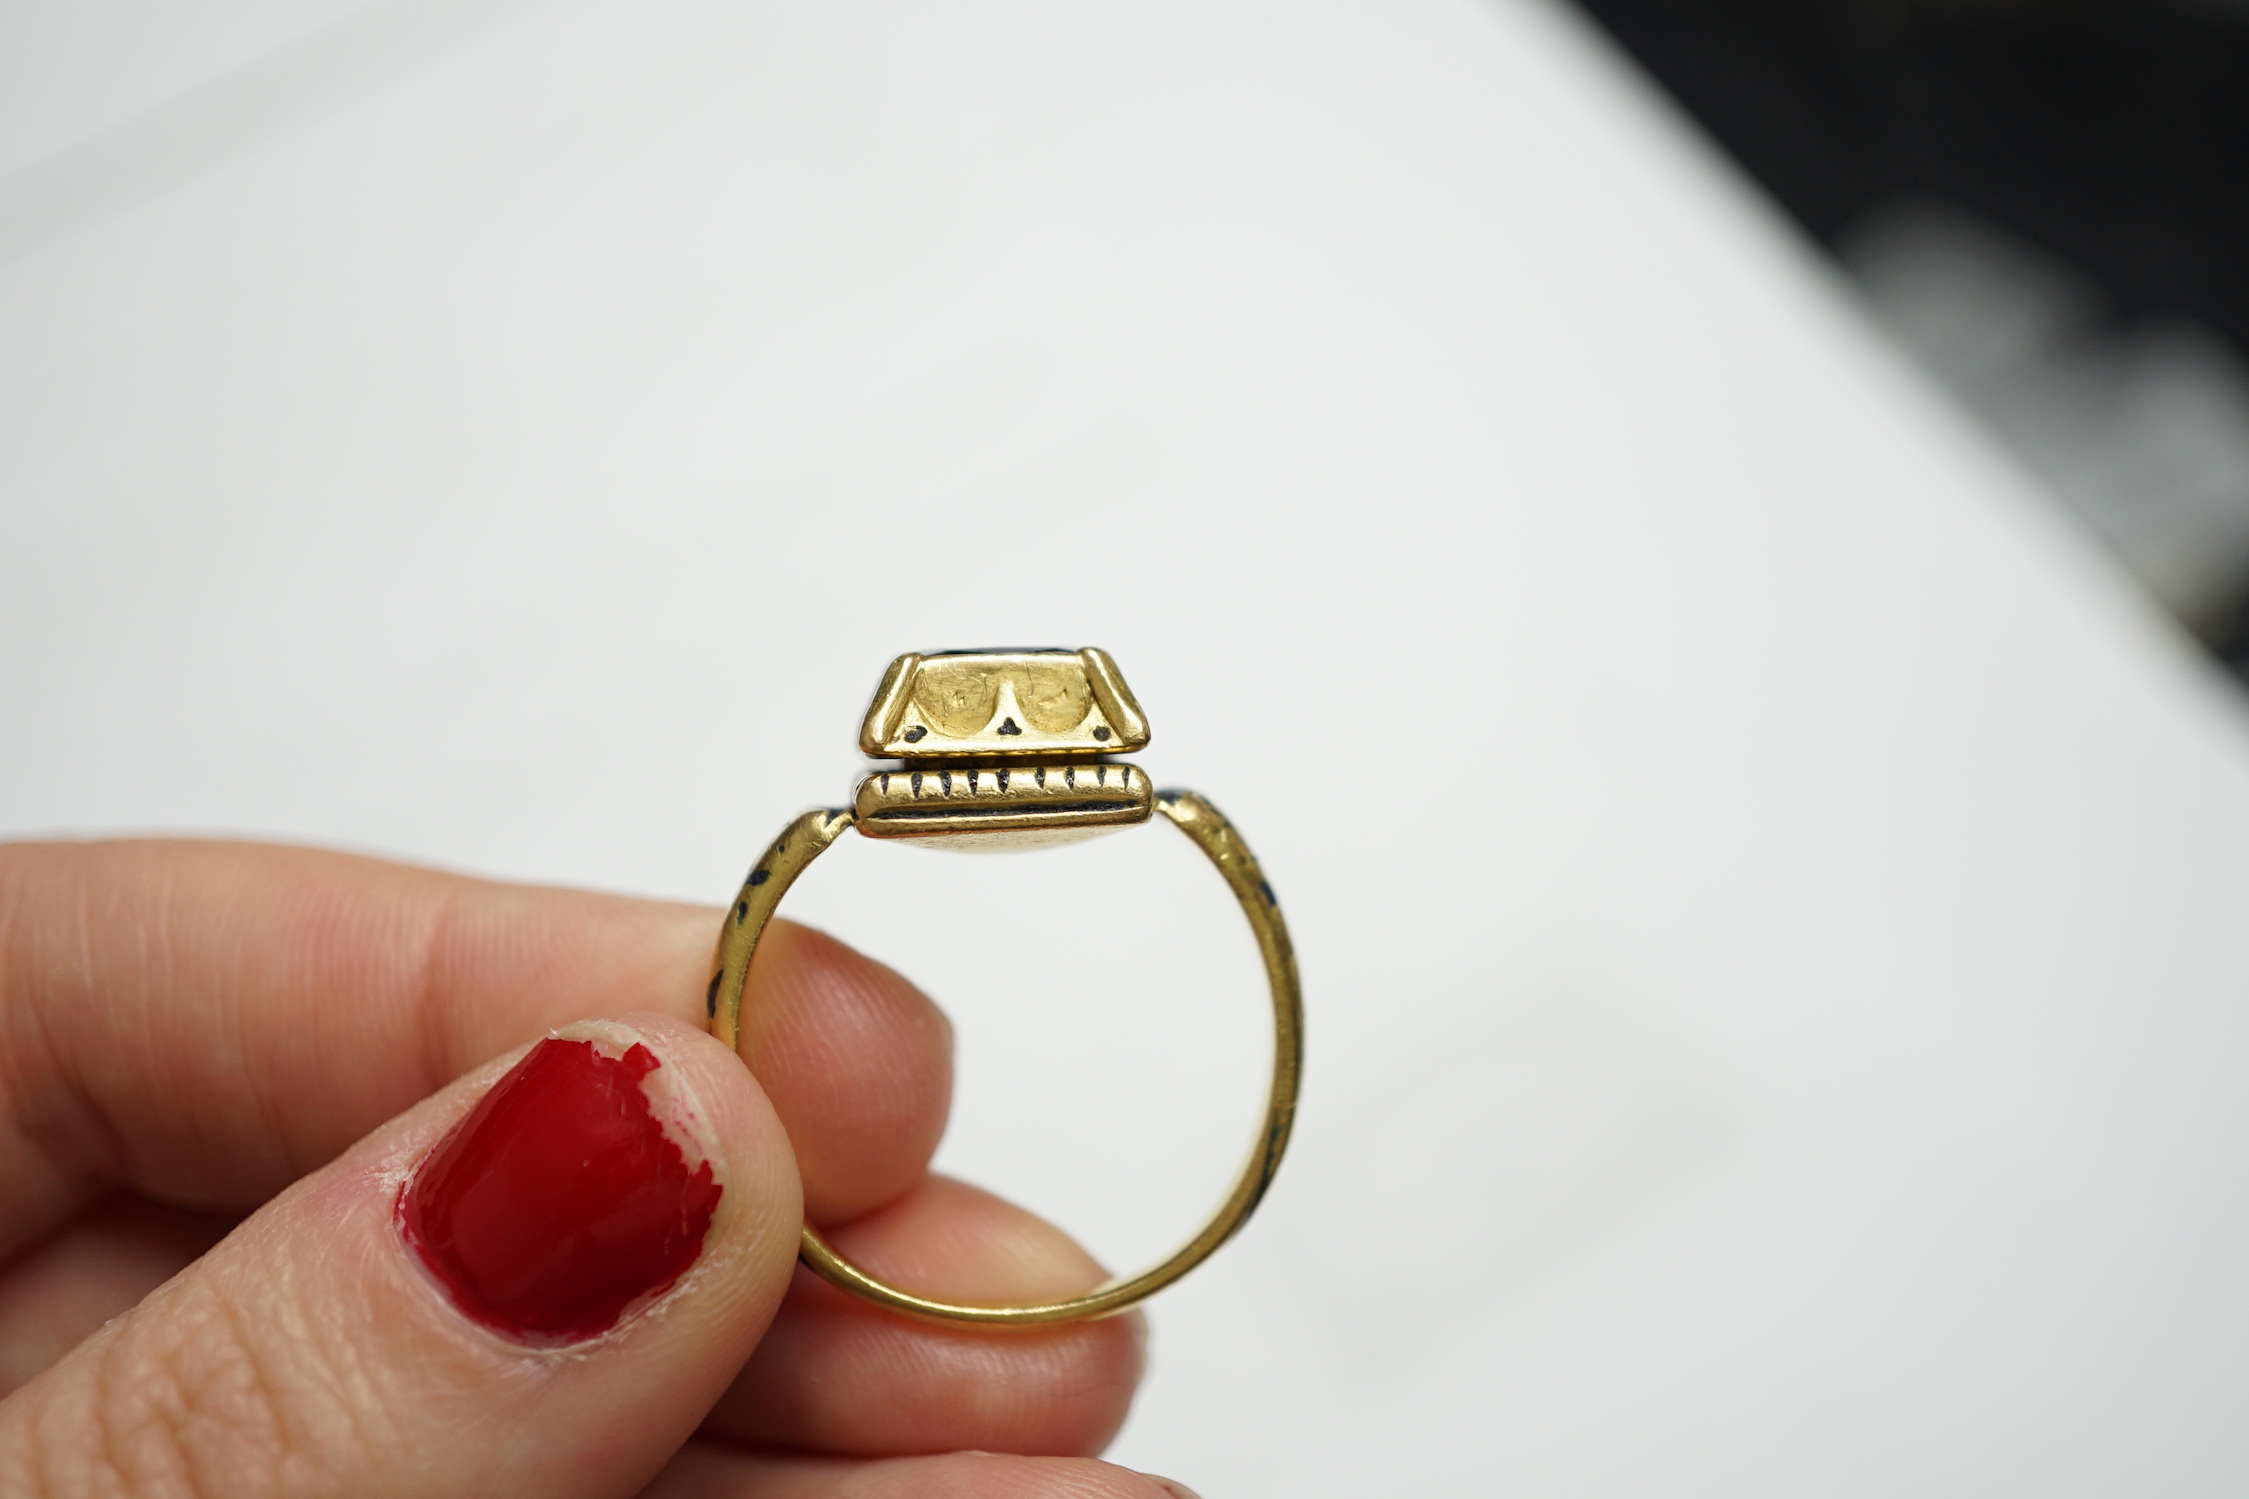 An antique high carat gold, black enamel and collet set cushion cut sapphire set 'poison' ring